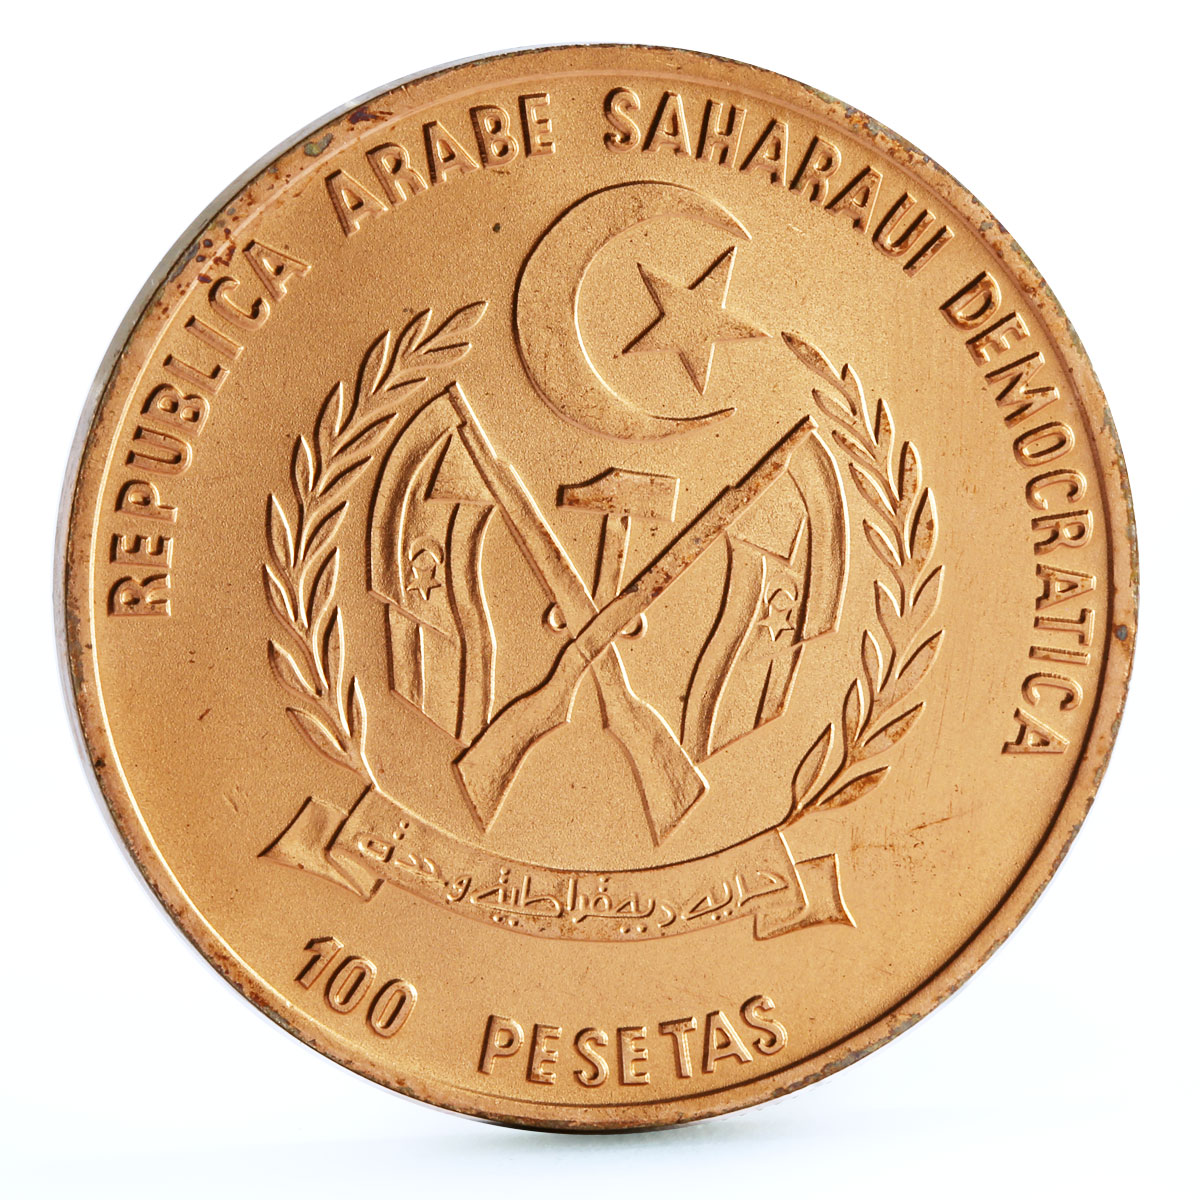 Saharawi 100 pesetas Prehistoric Animals Dinosaurs Tarbosaurus copper coin 1993